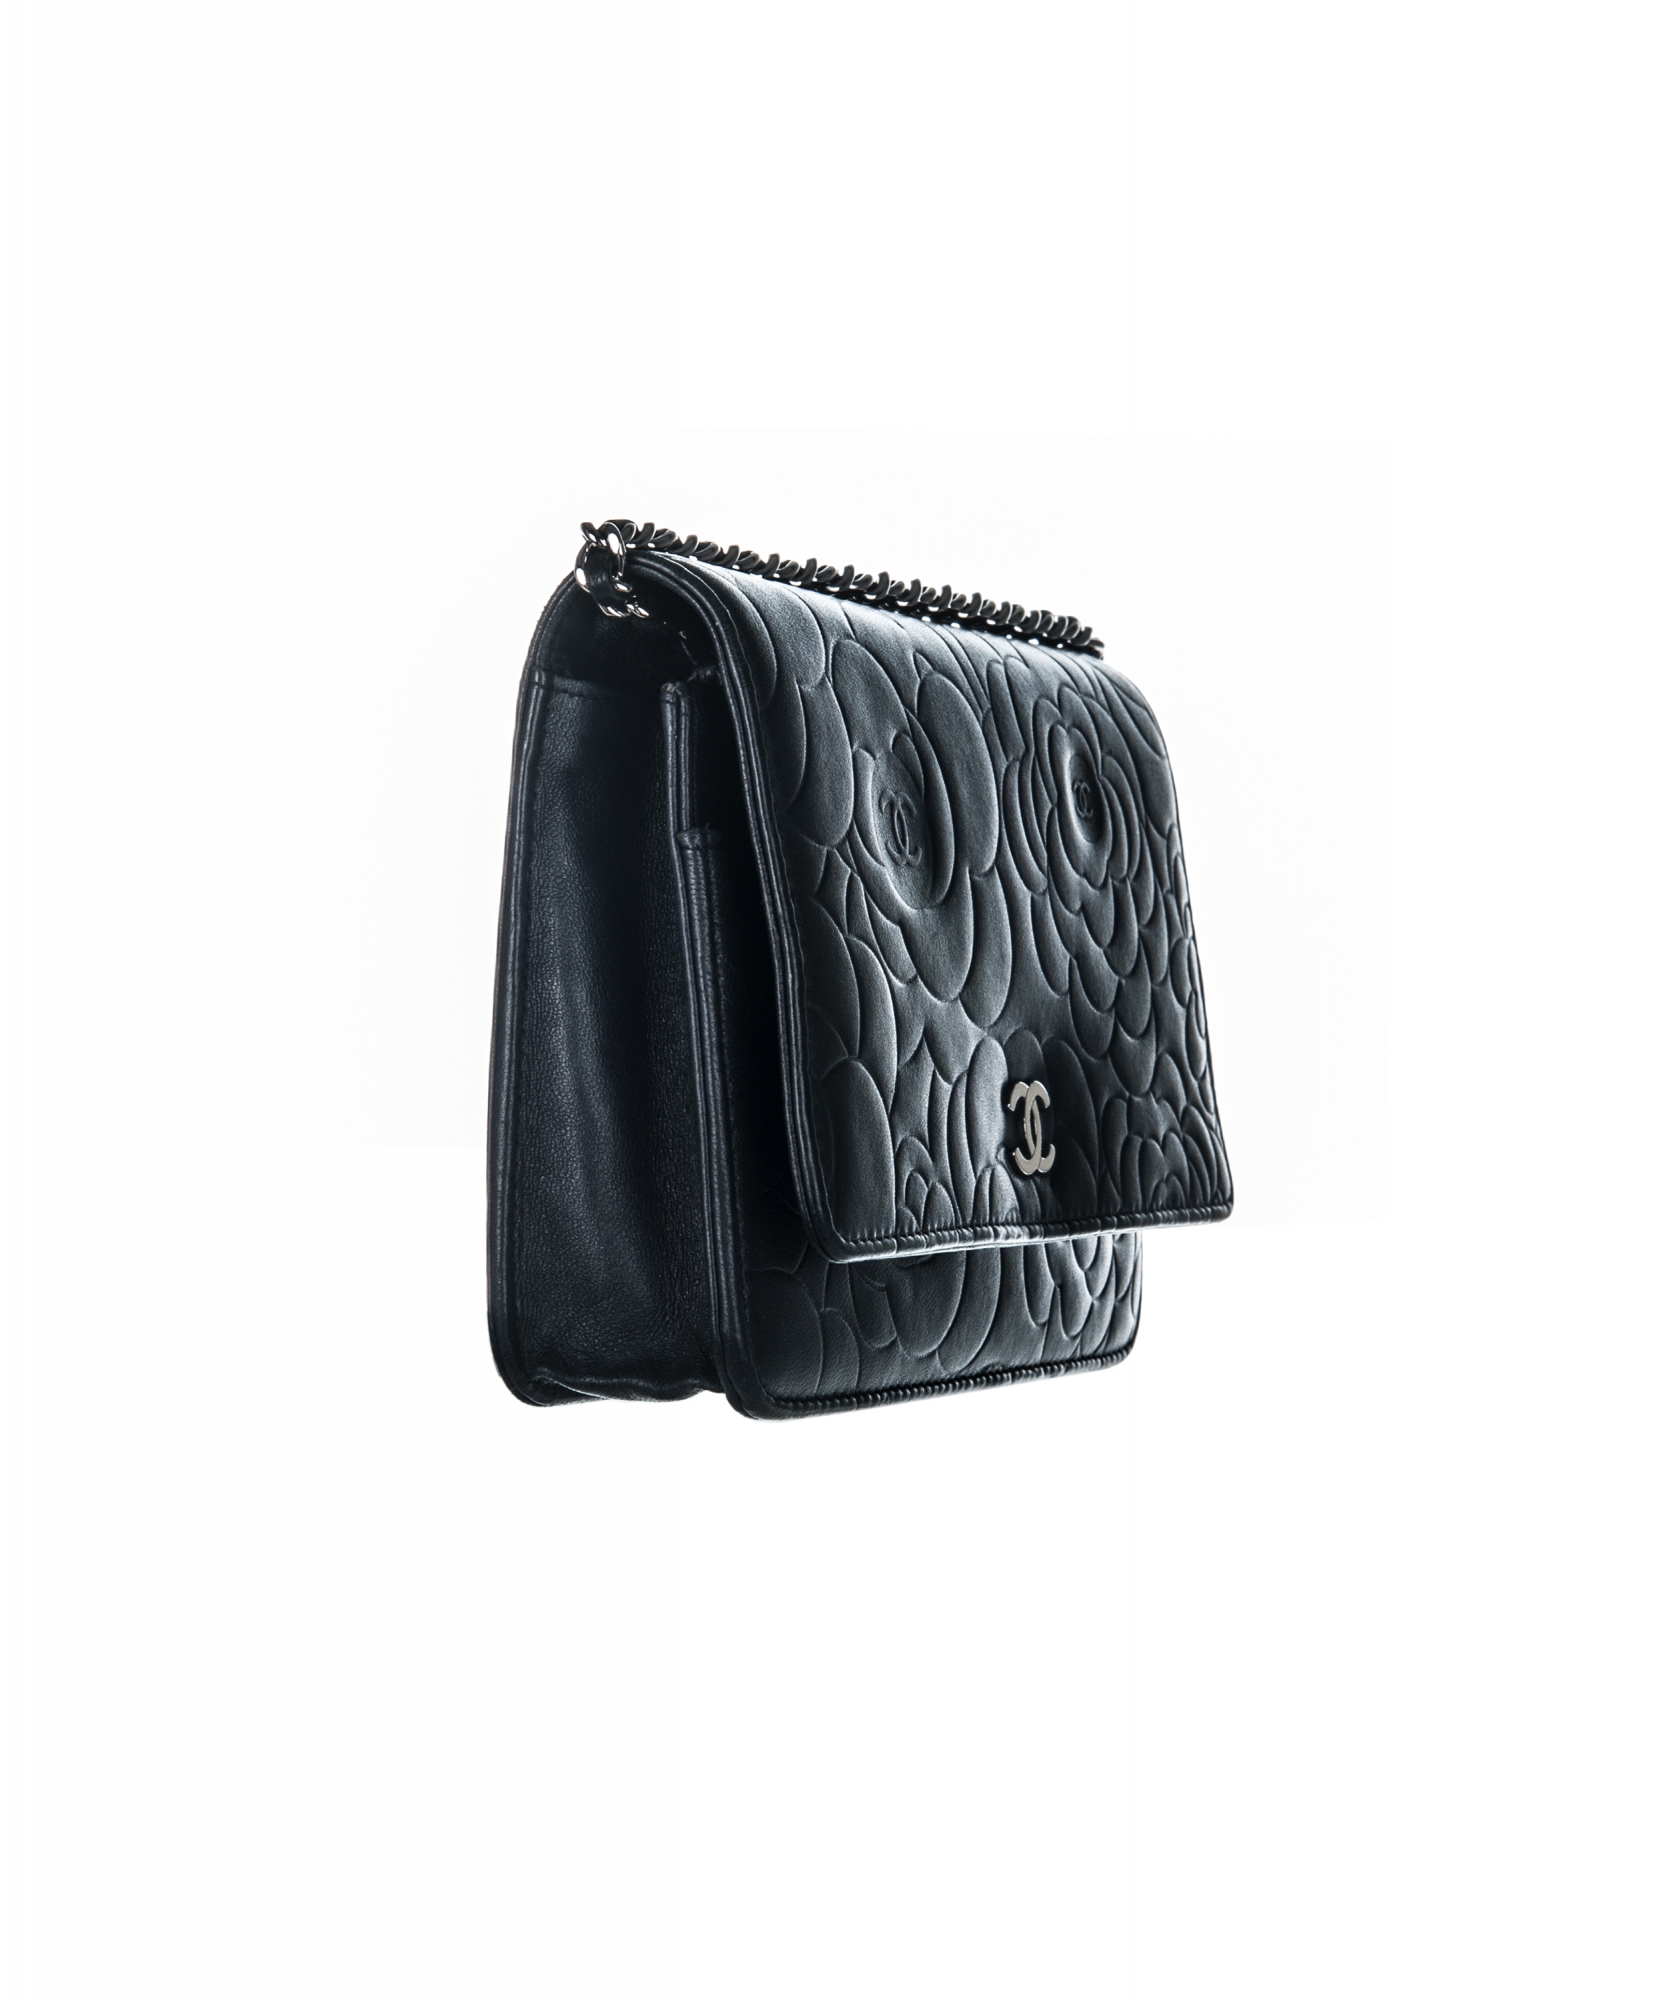 chanel wallet on chain black caviar bag